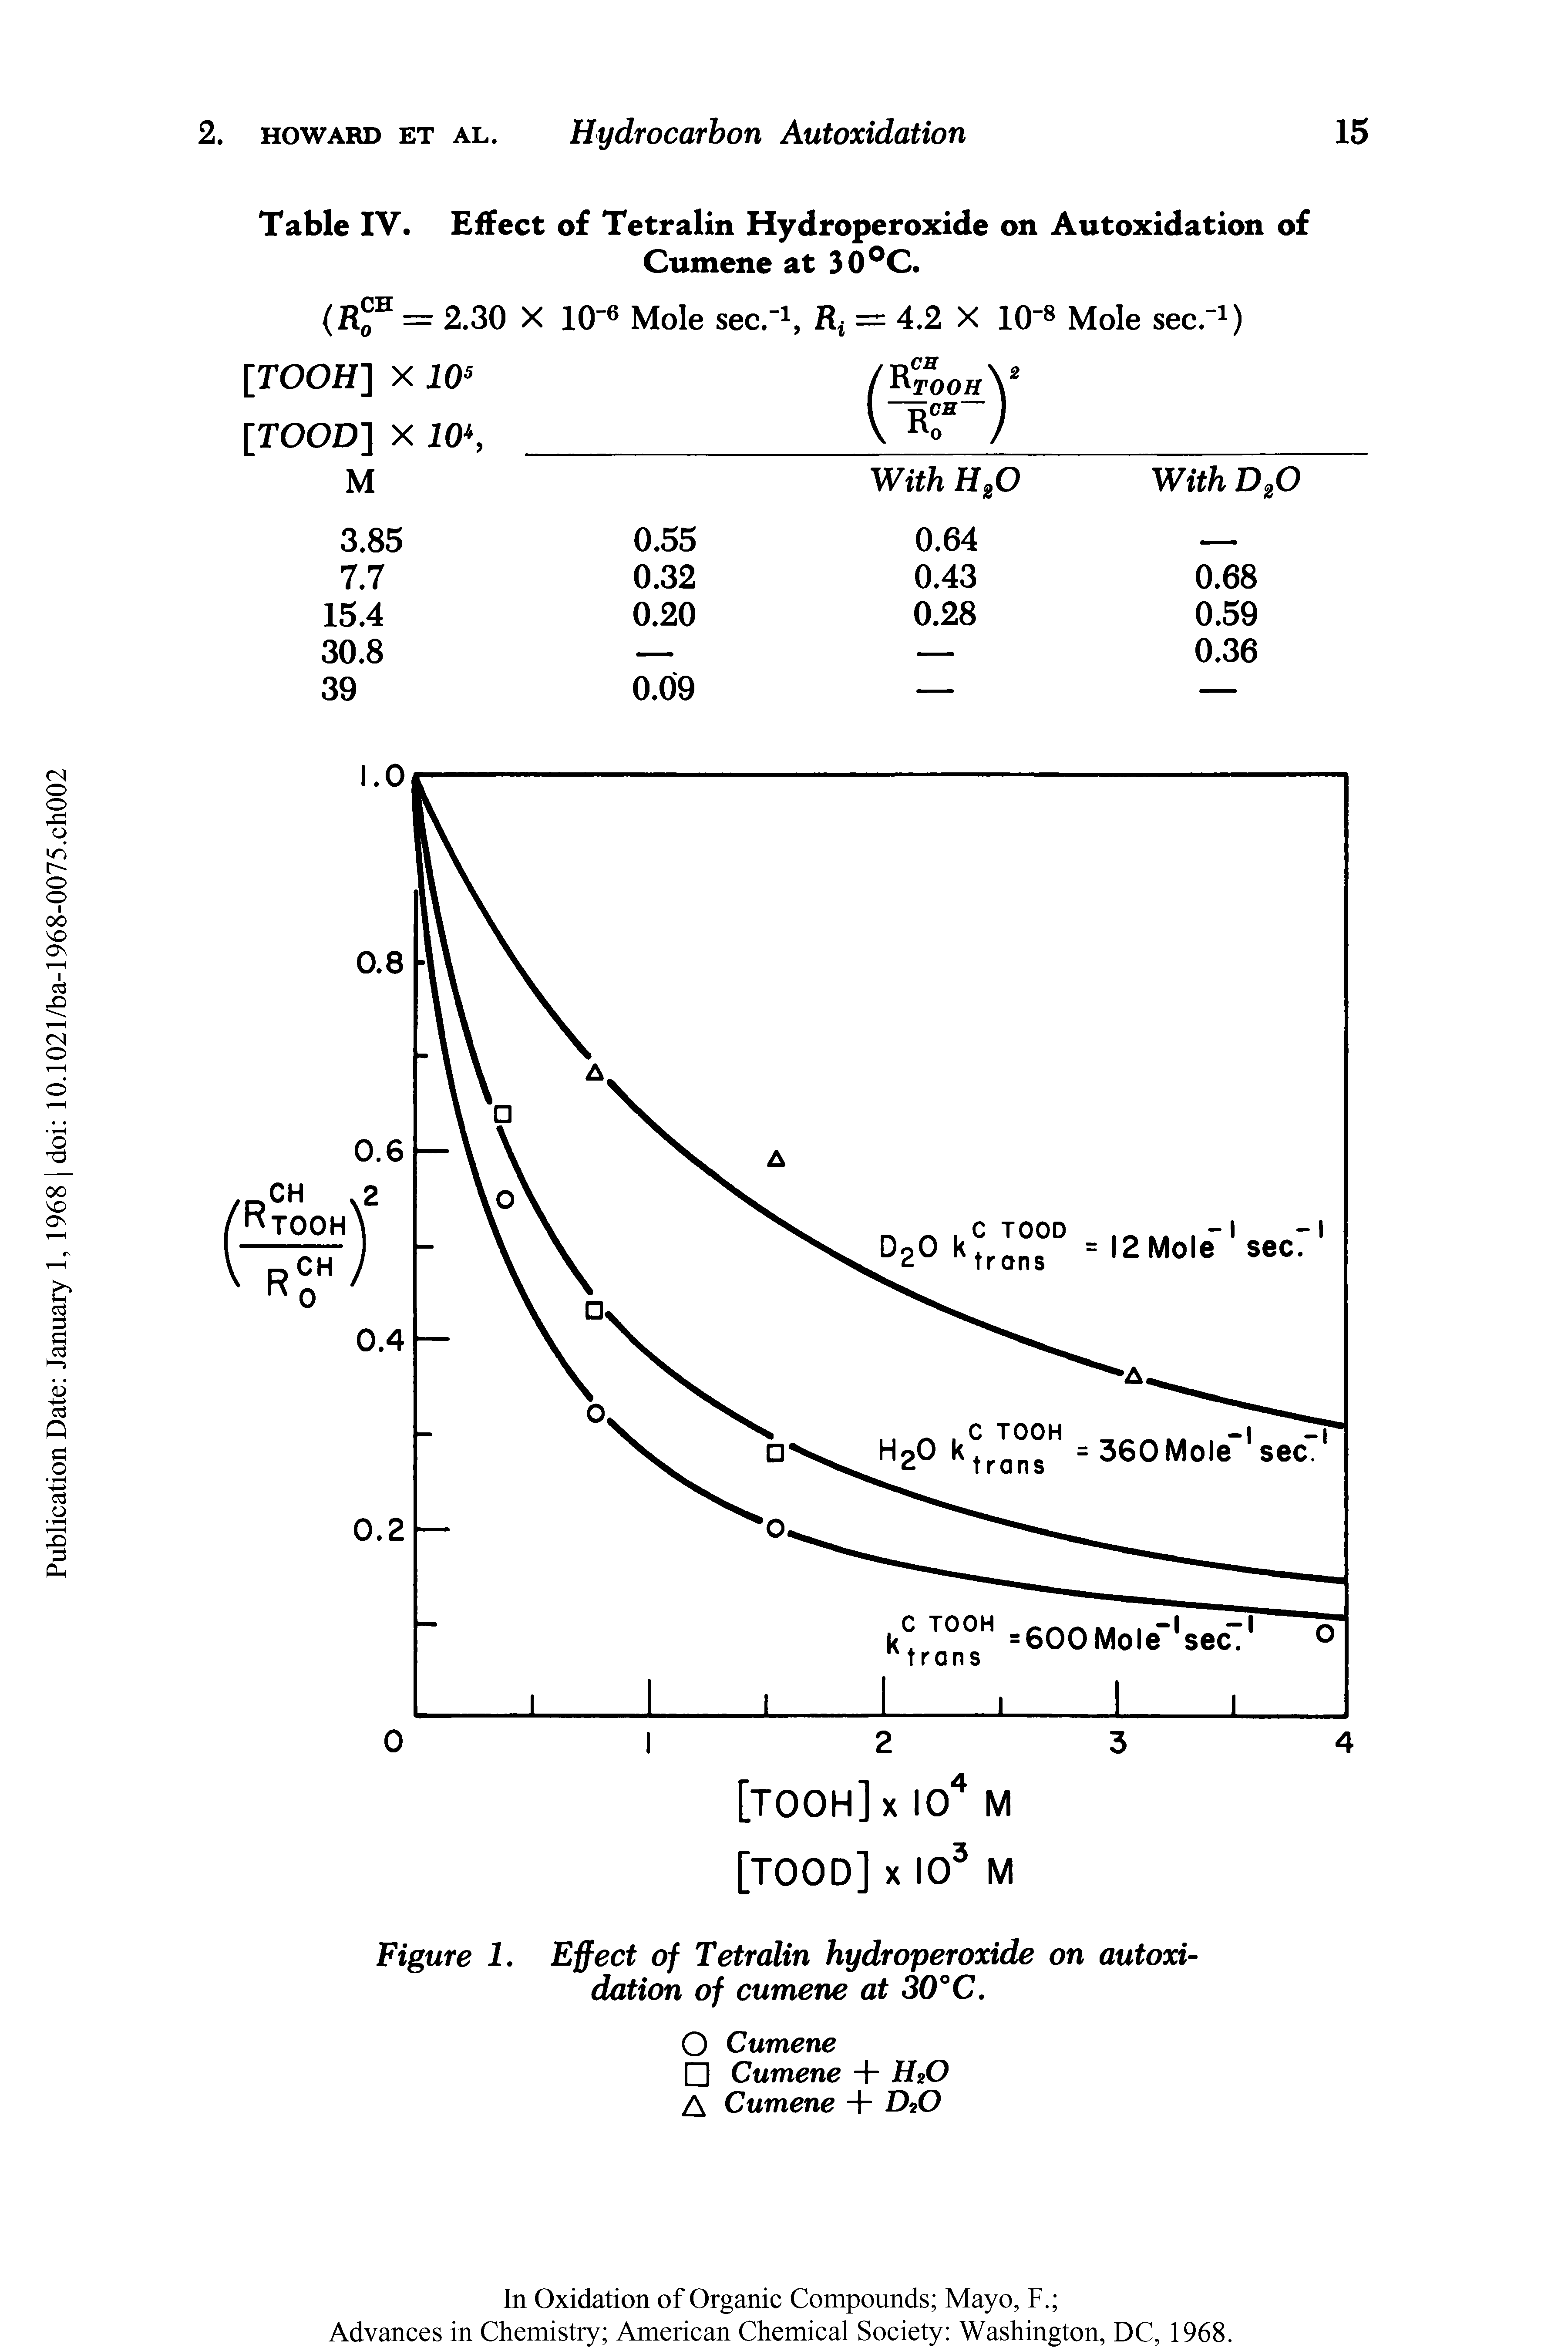 Table IV. Effect of Tetralin Hydroperoxide on Autoxidation of Cumene at 30°C.